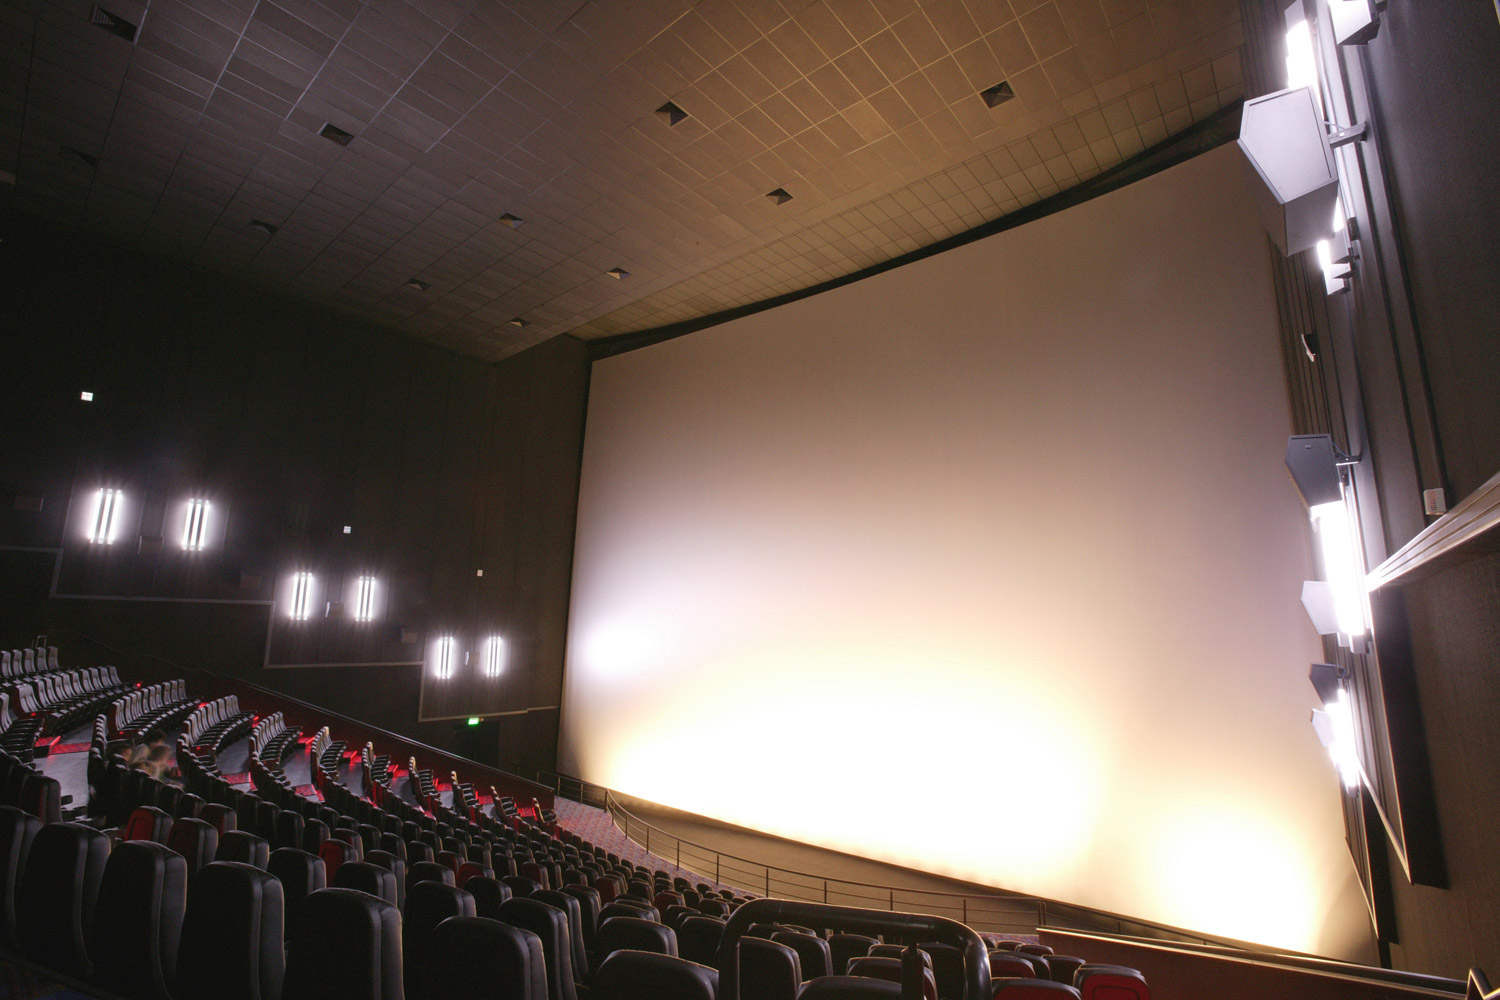 Кинотеатр сбс билеты. СБС кинотеатр Краснодар IMAX. Аймакс СБС Краснодар. Зал IMAX СБС Краснодар. Кинотеатр в Краснодаре аймакс 3д.